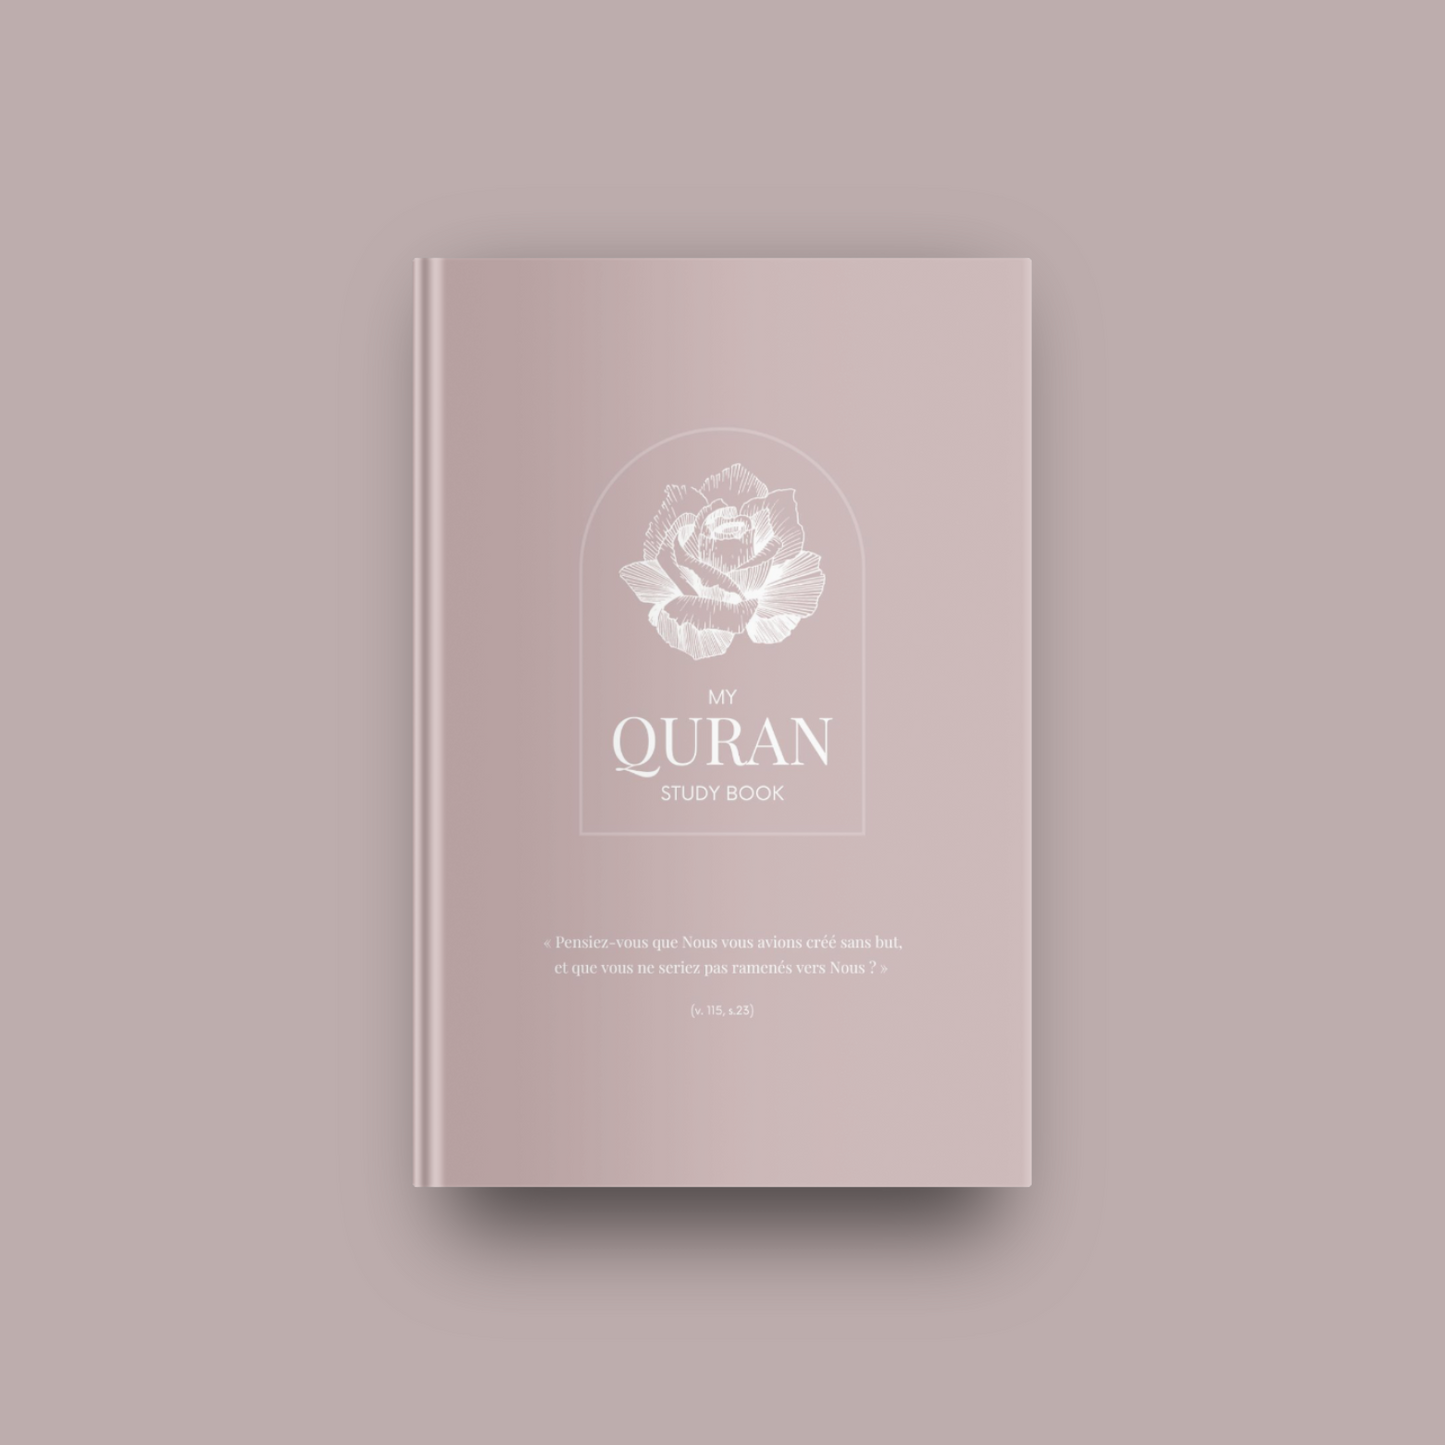 My Quran Study Book